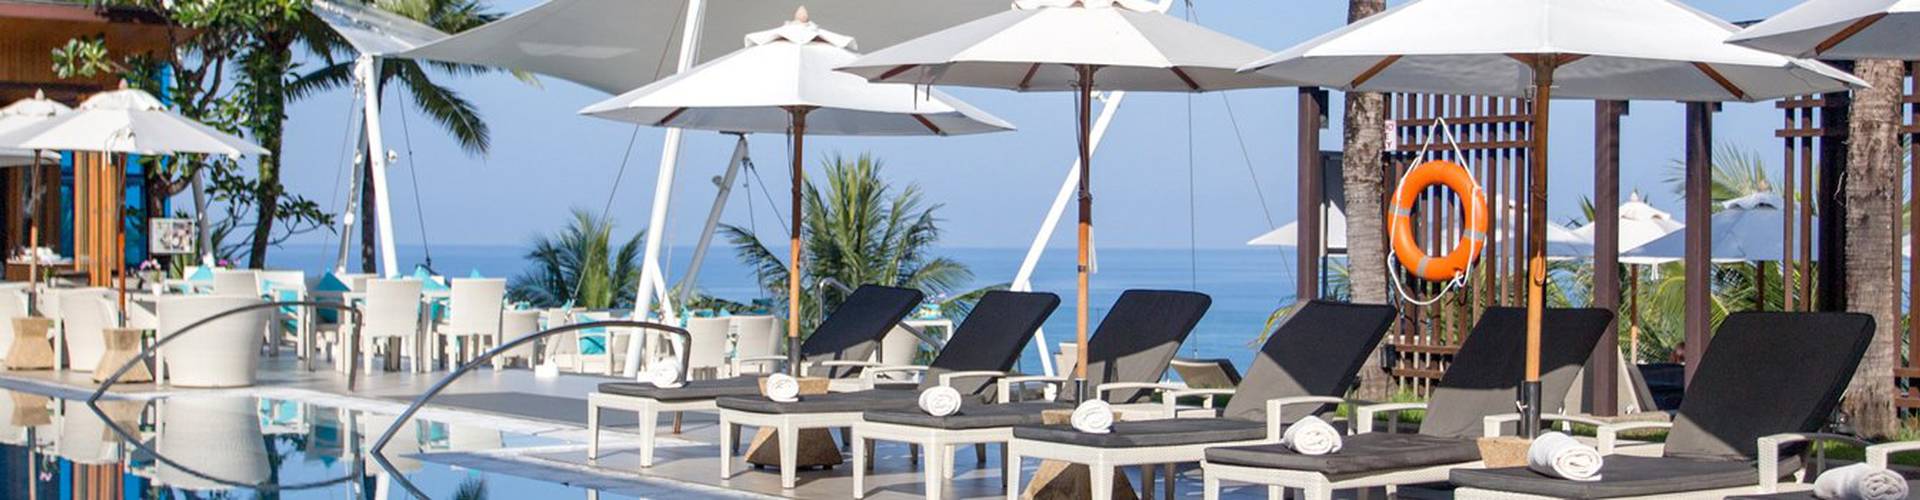 Cape Sienna Phuket Gourmet Hotel & Villas - Phuket - Privacy policy